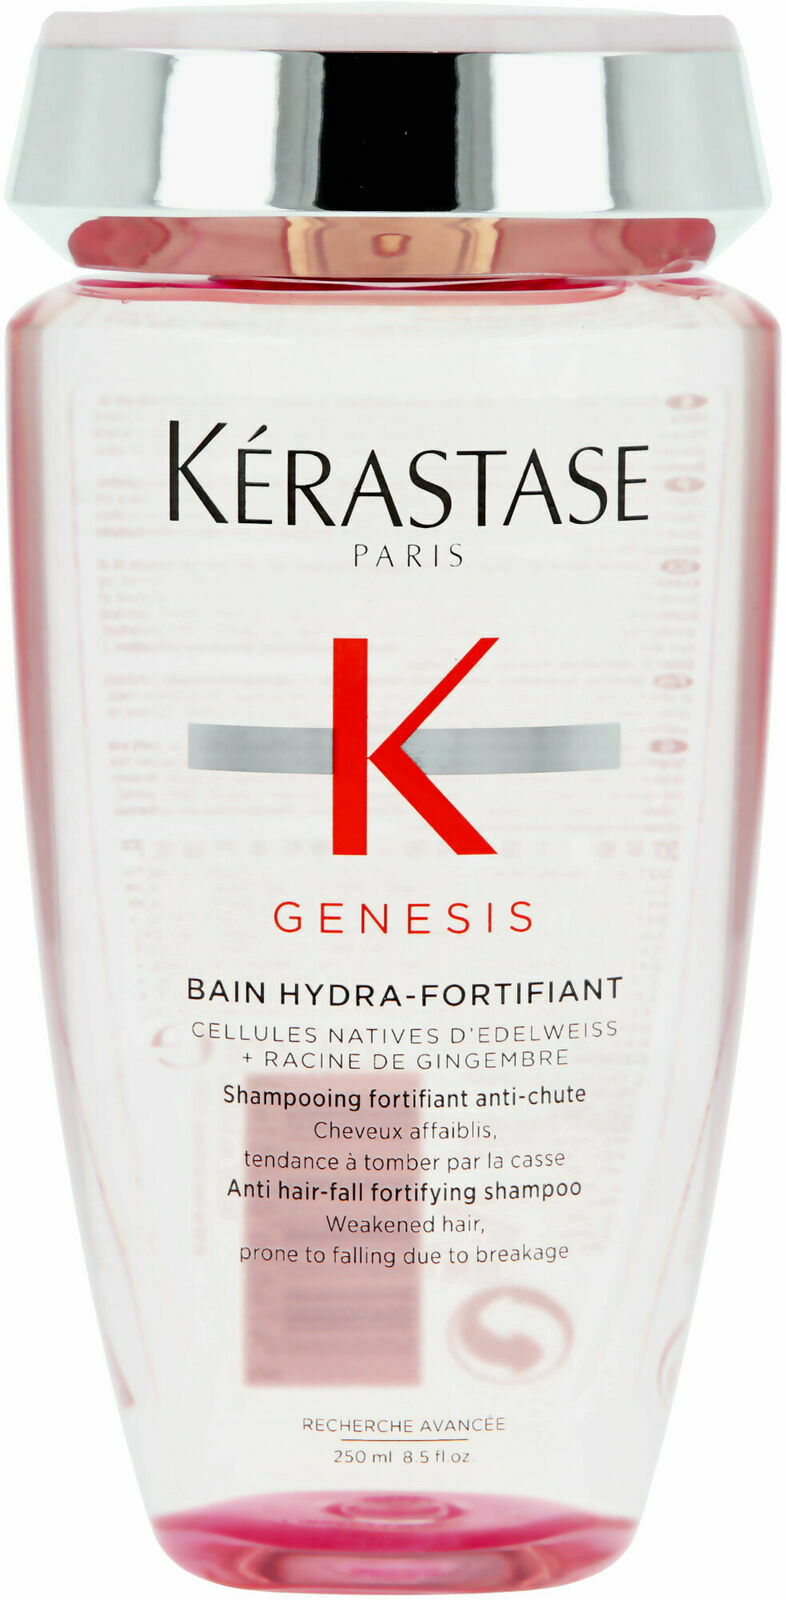 Kerastase Genesis Bain Hydra-Fortifiant – Shampoo for Zone Normal to Hai Oily Shampoo